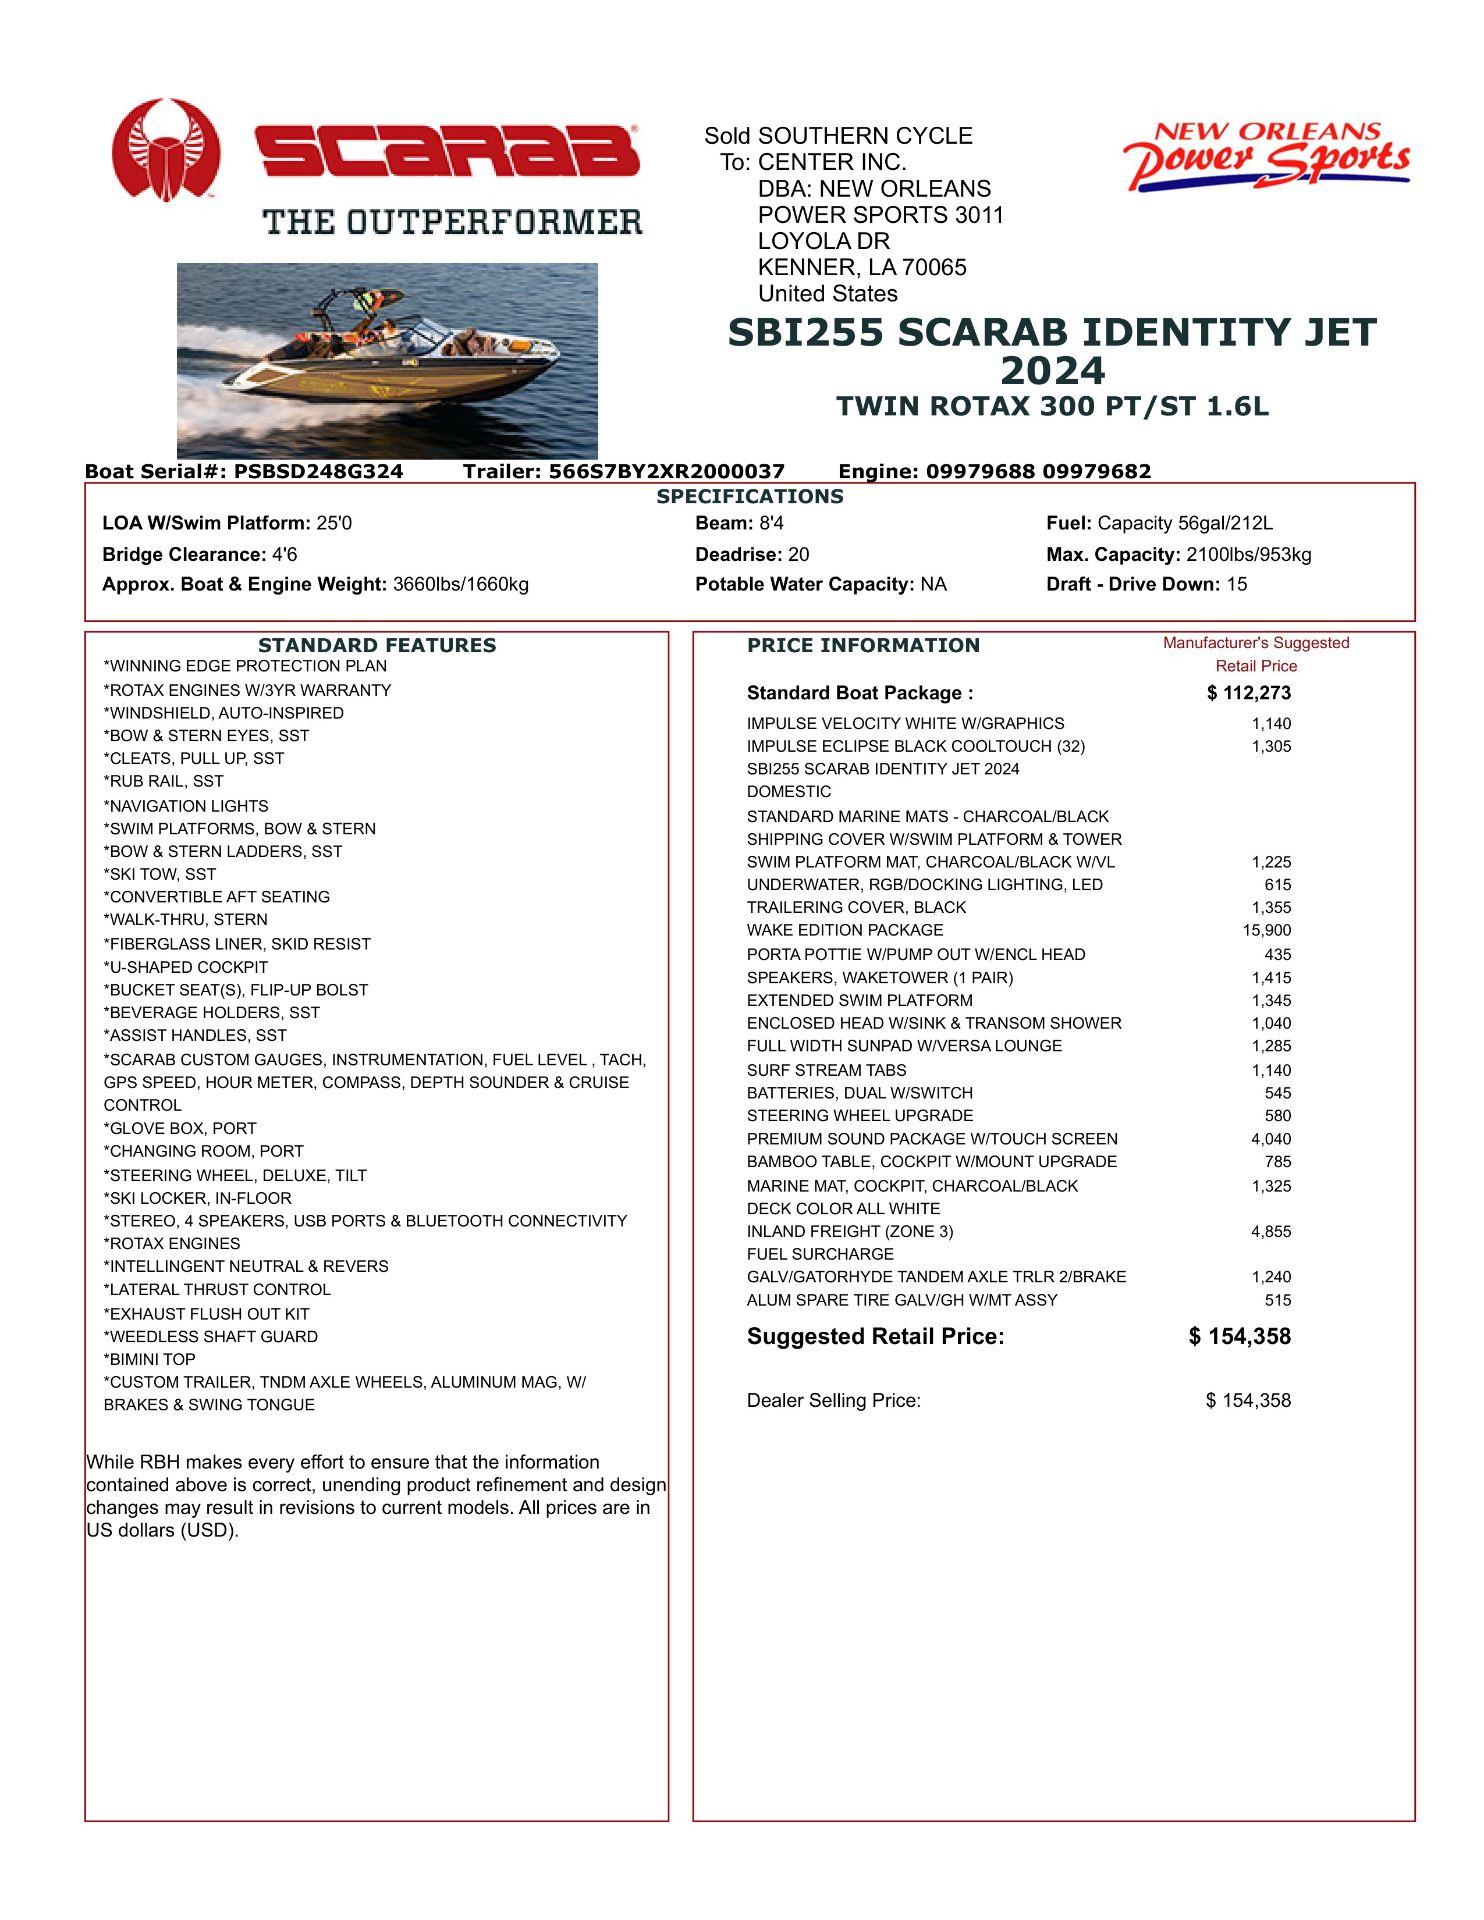 2024 Scarab SBI255 IDENTITY